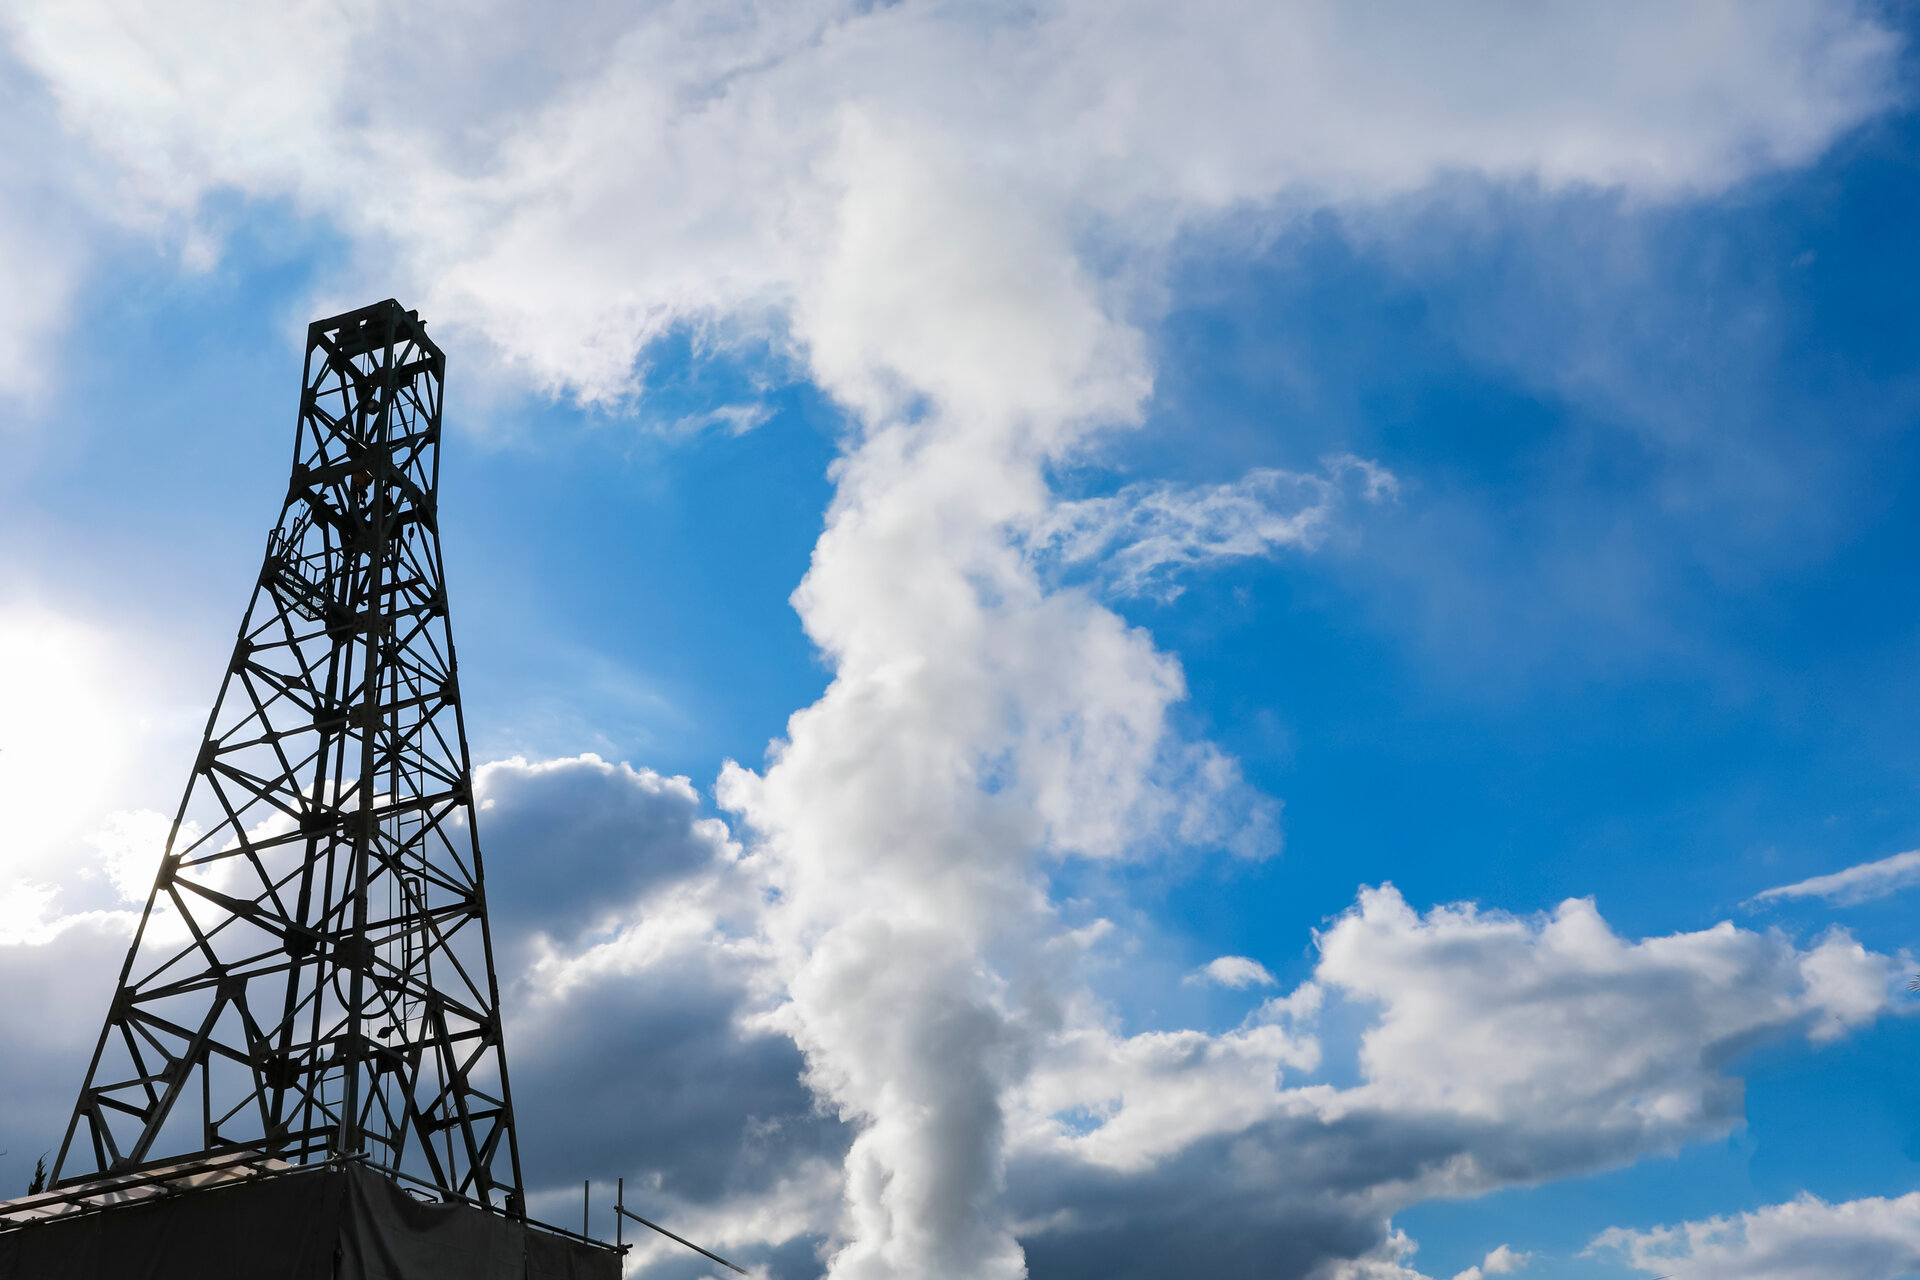 Drilling software improves risk assessment and reward estimation in geothermal energy